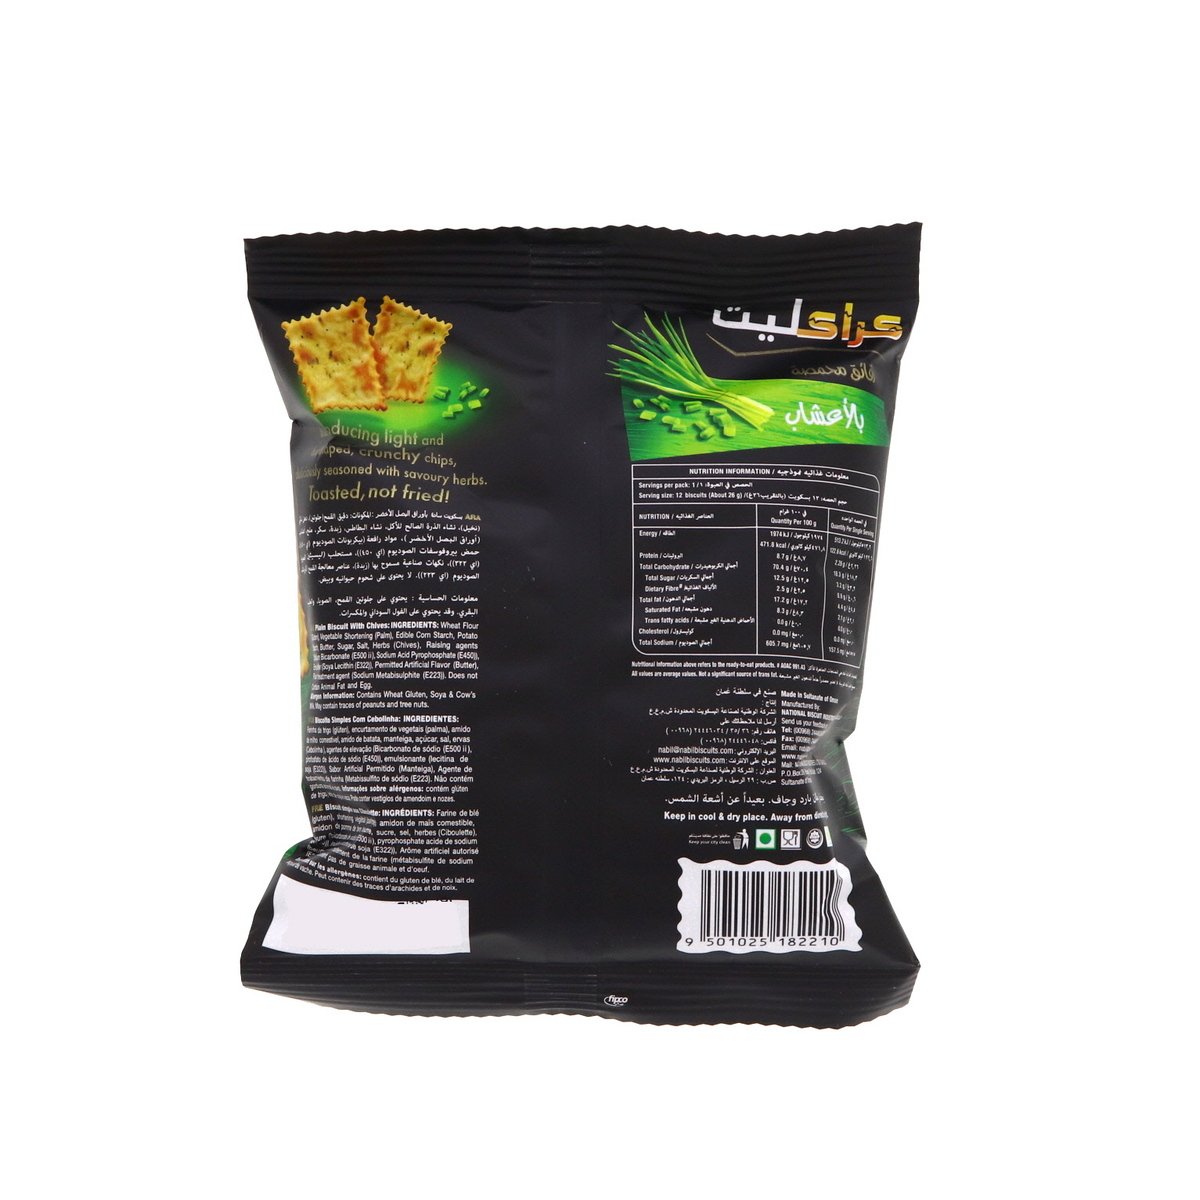 Kracklite Toasted Chips Herbs 26 g